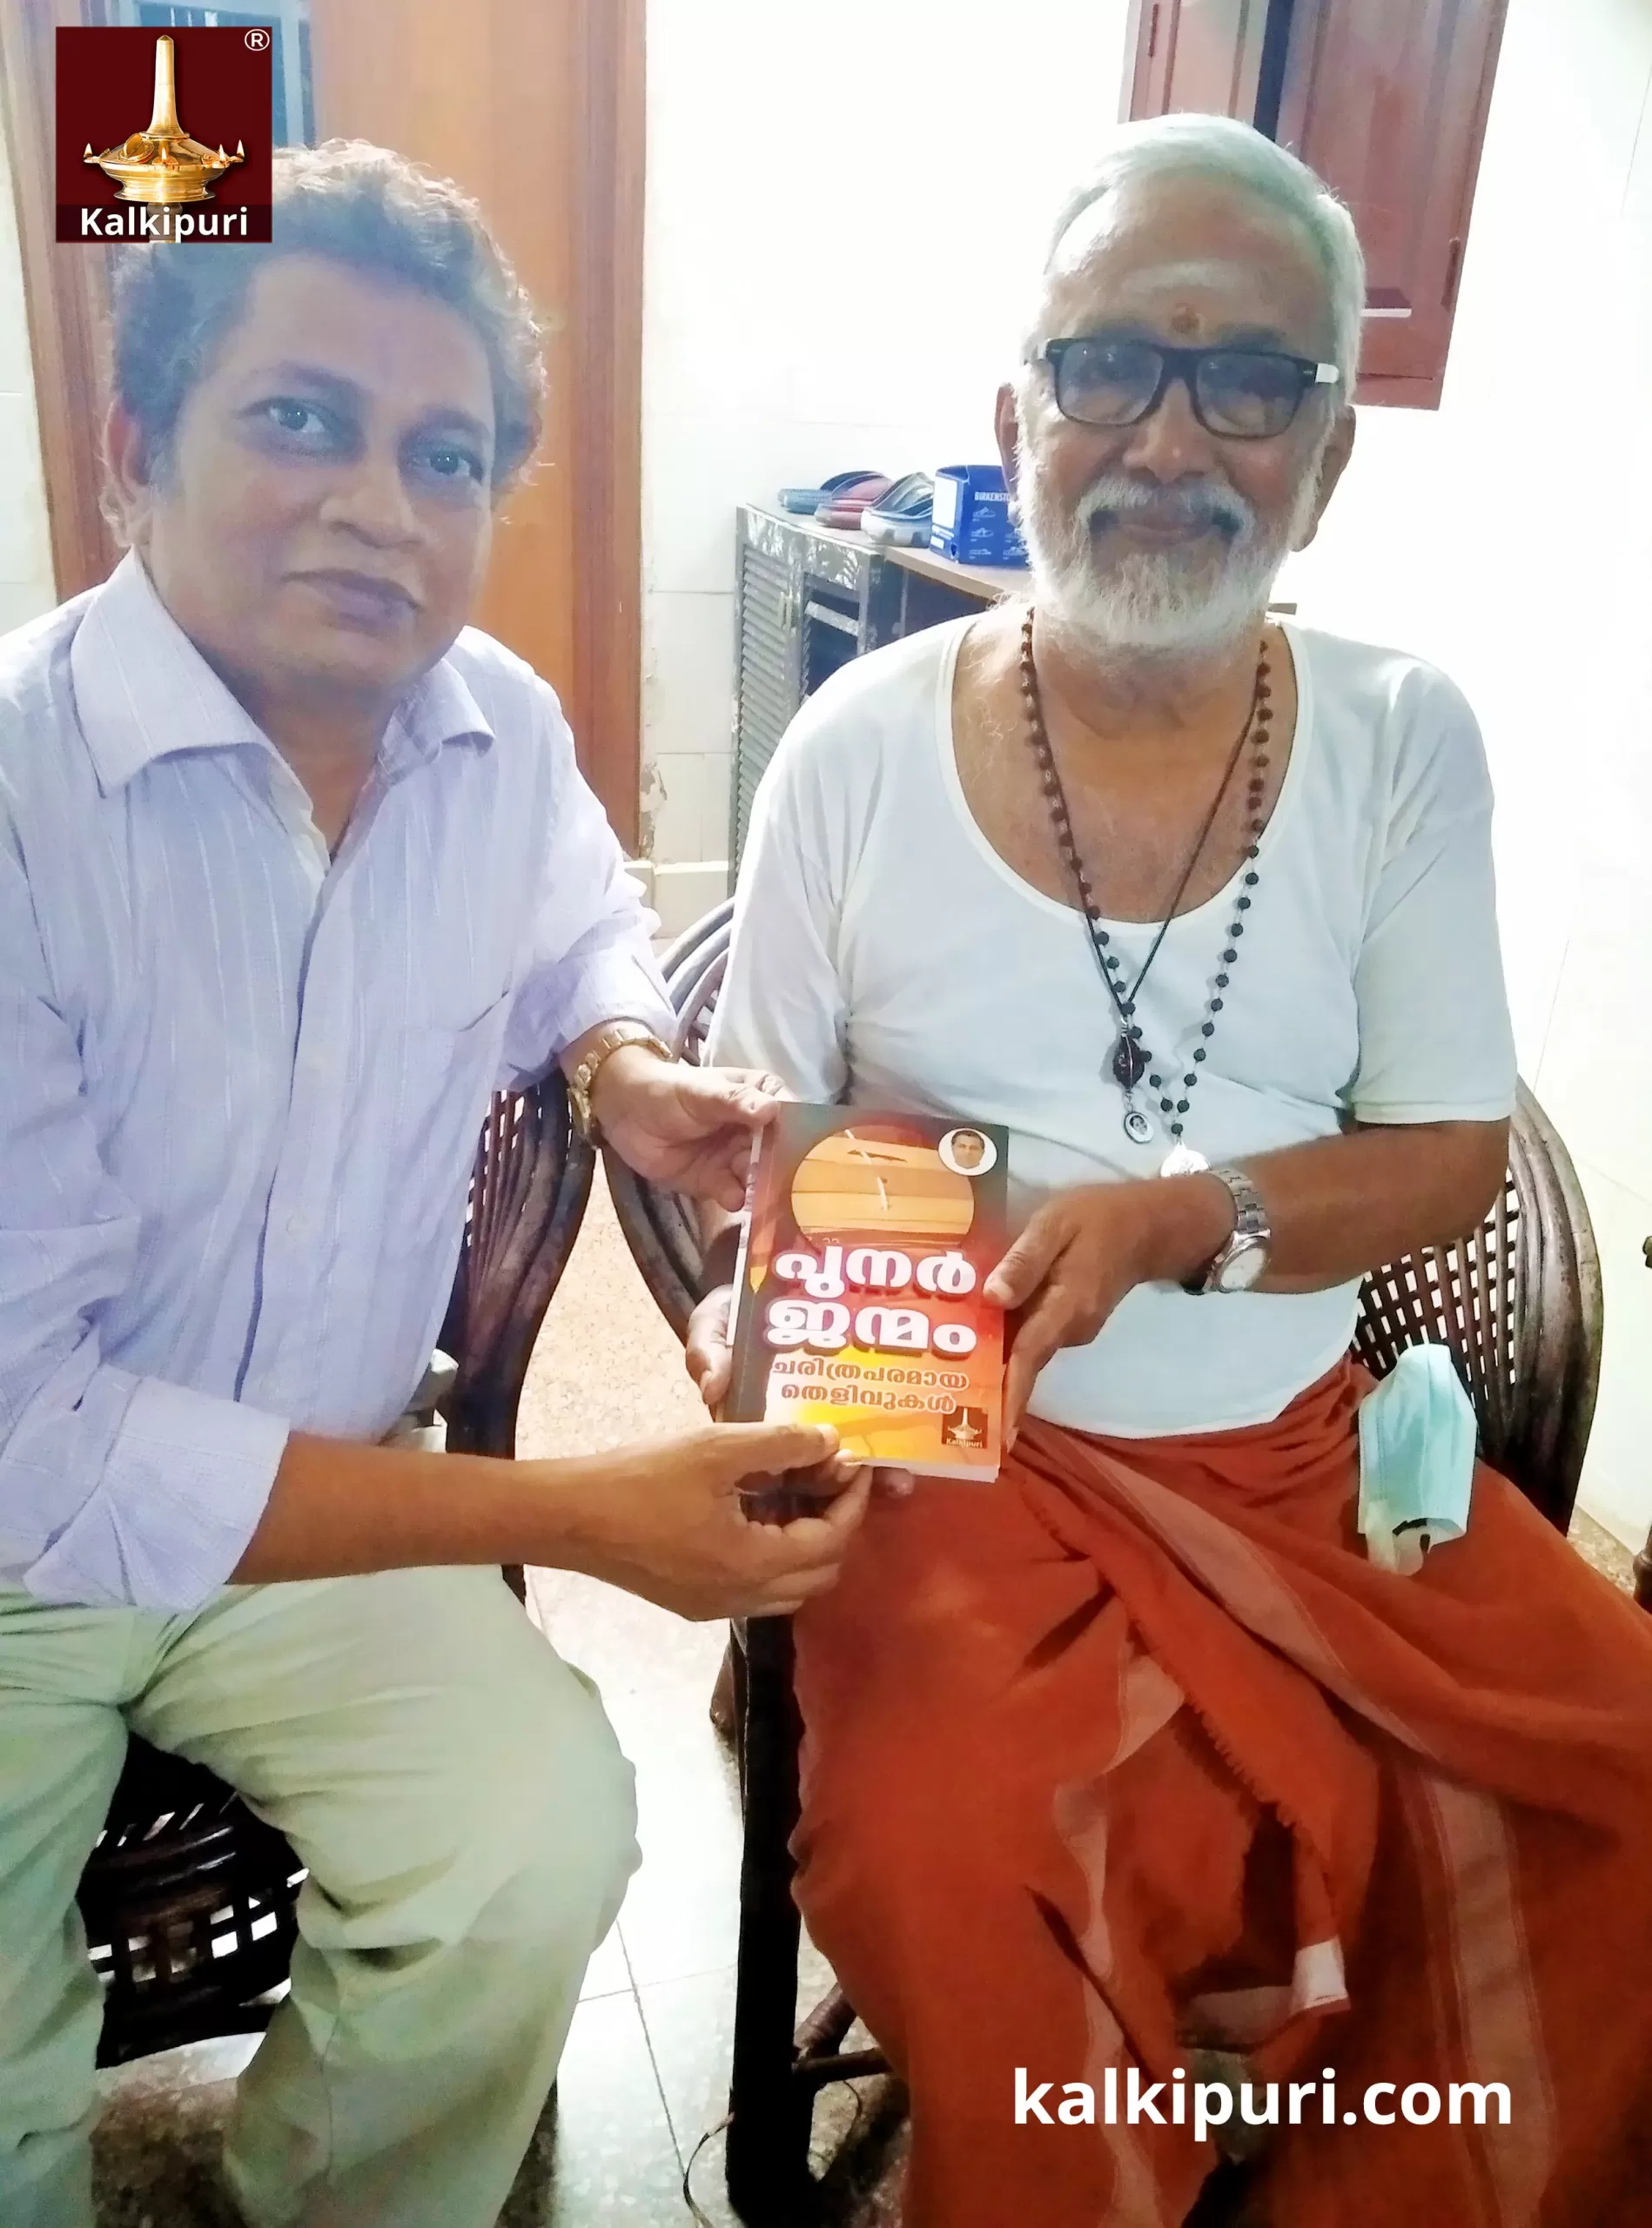 Mukundaraj handed over the Book (Punarjanmam Charithraparamaaya Thelivukal by Kalki) to Chandrahasan